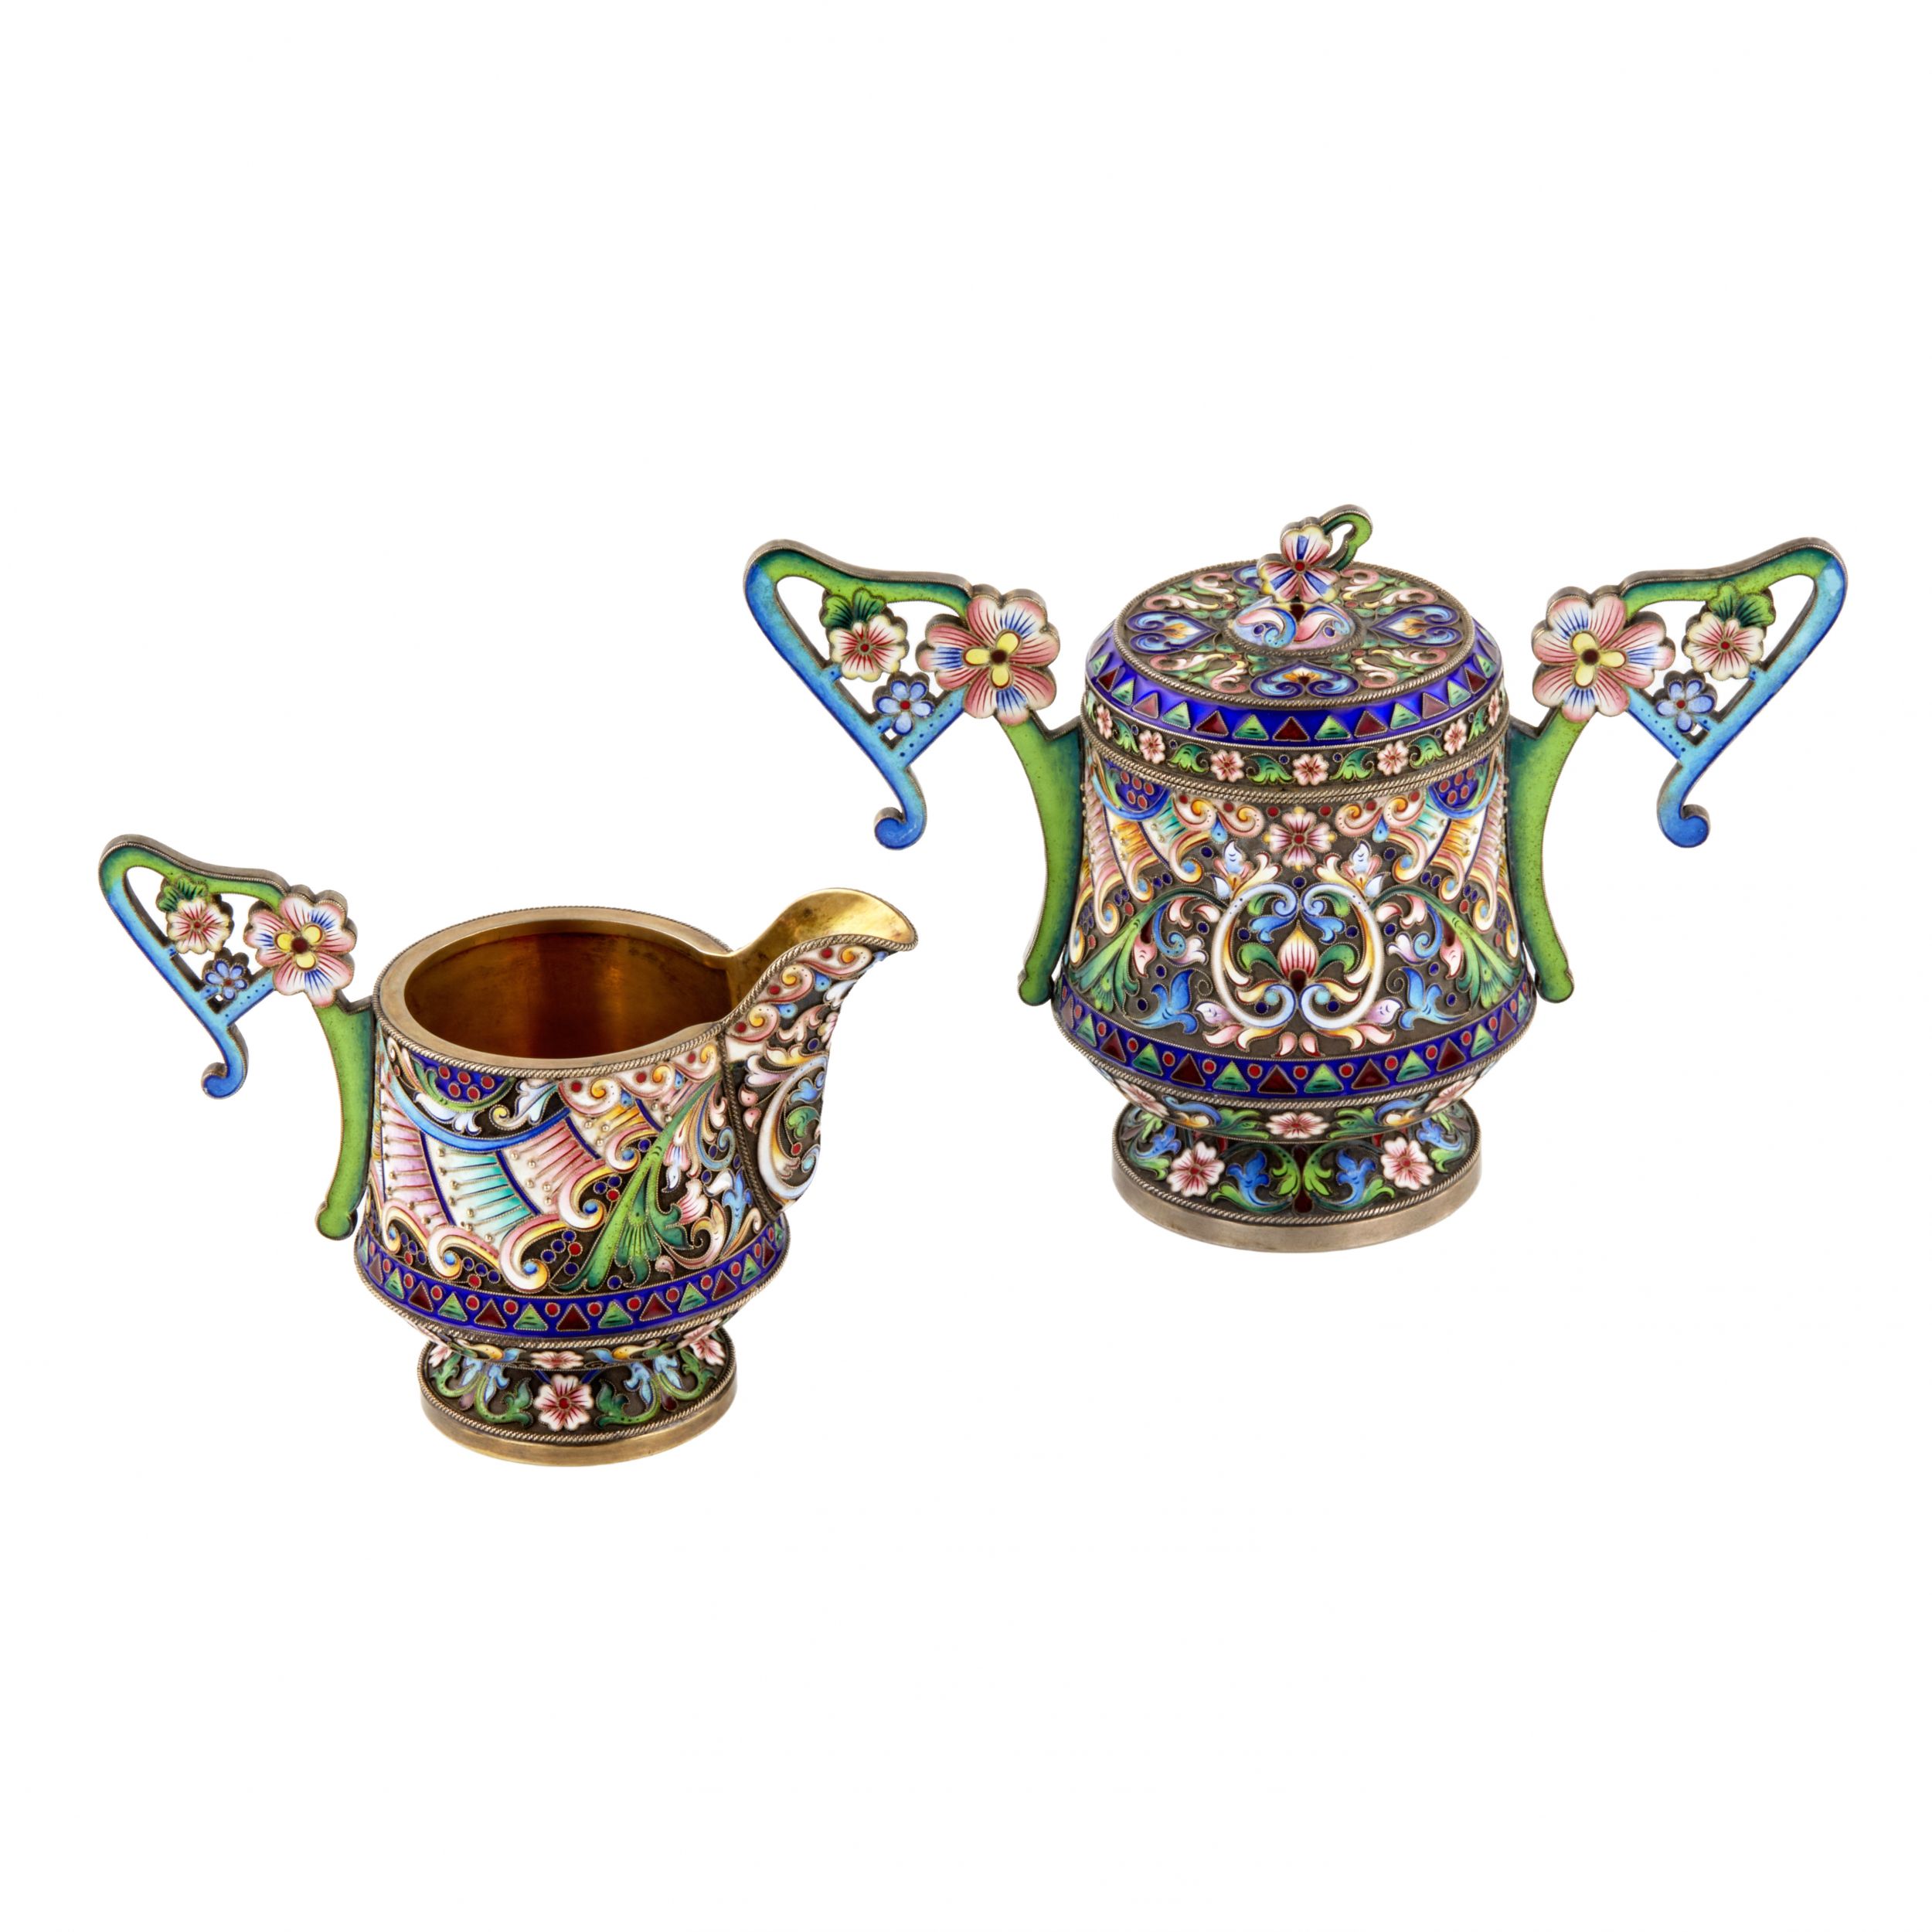 Russian-silver-creamer-and-cloisonne-enamel-sugar-bowl-in-Art-Nouveau-style